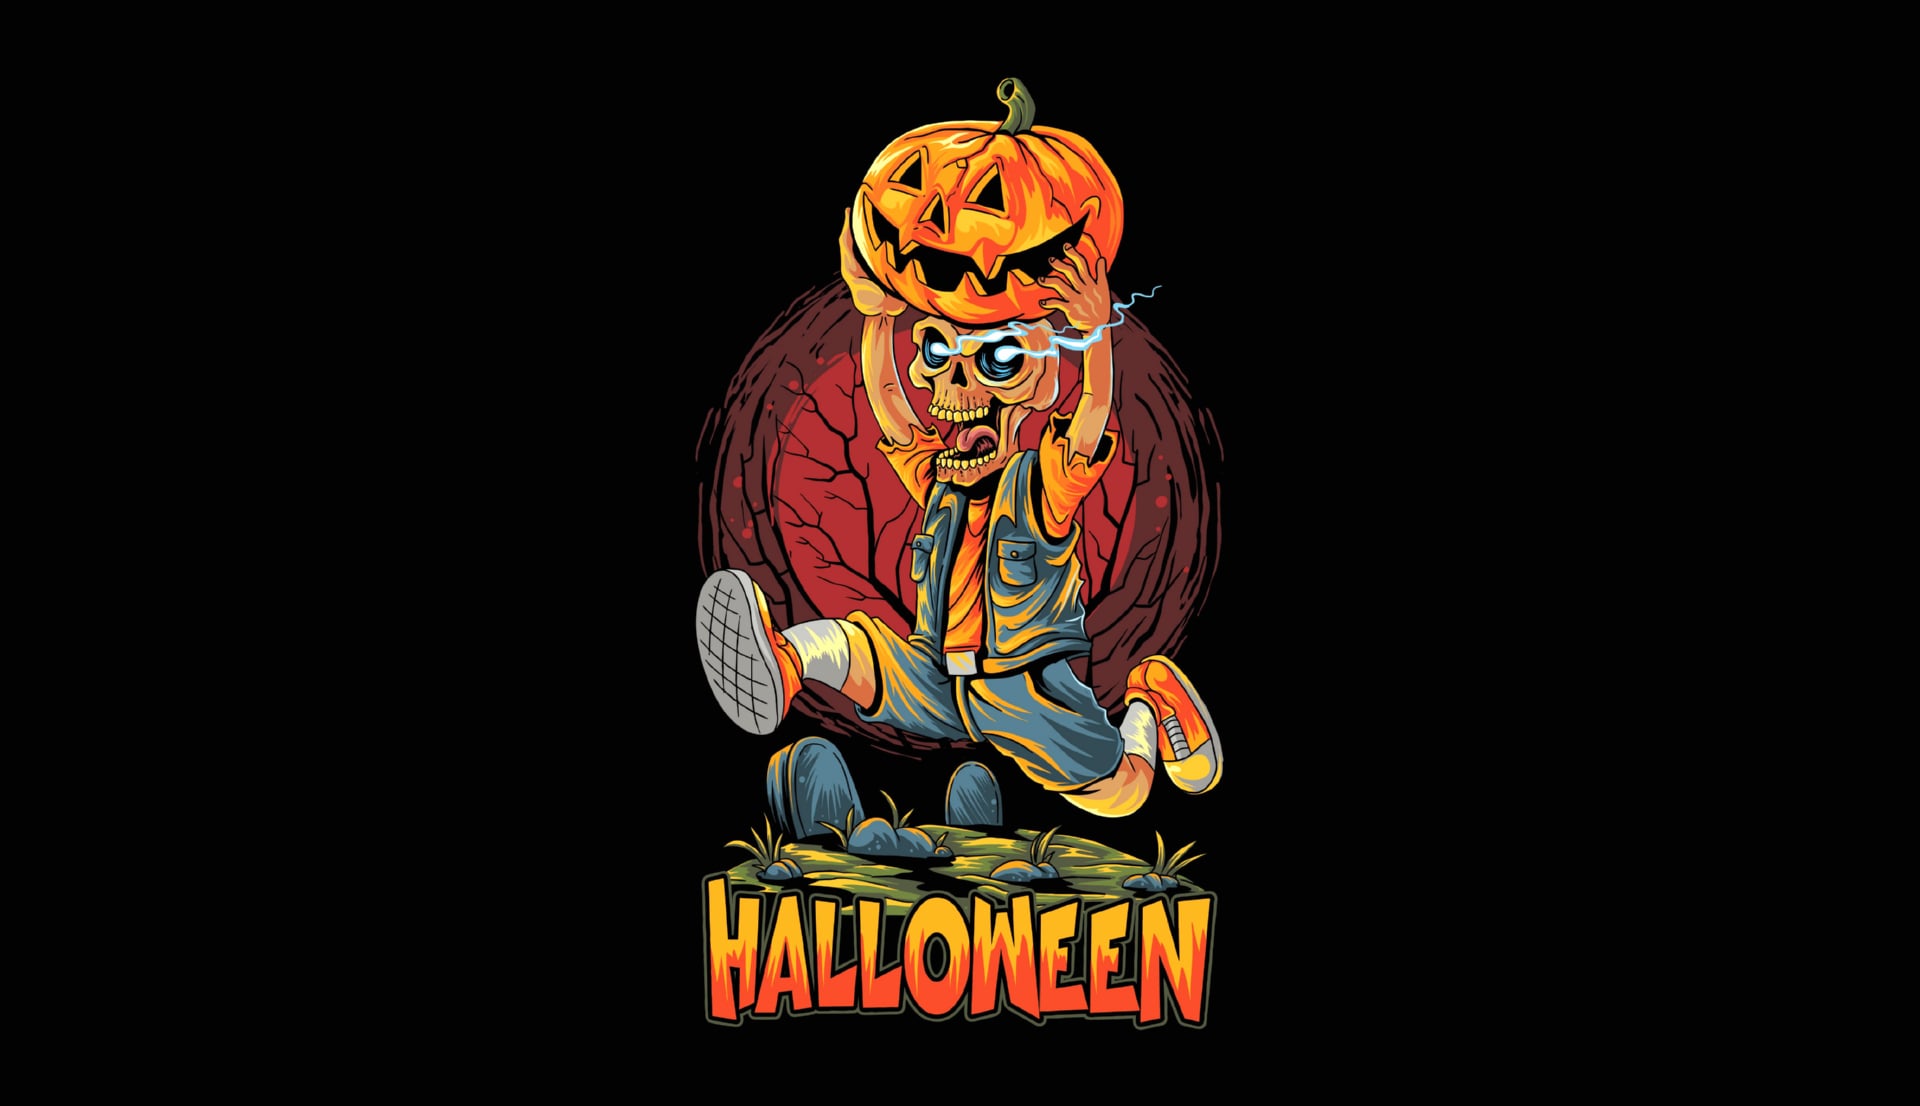 Digital Art Halloween zombie at 1024 x 1024 iPad size wallpapers HD quality